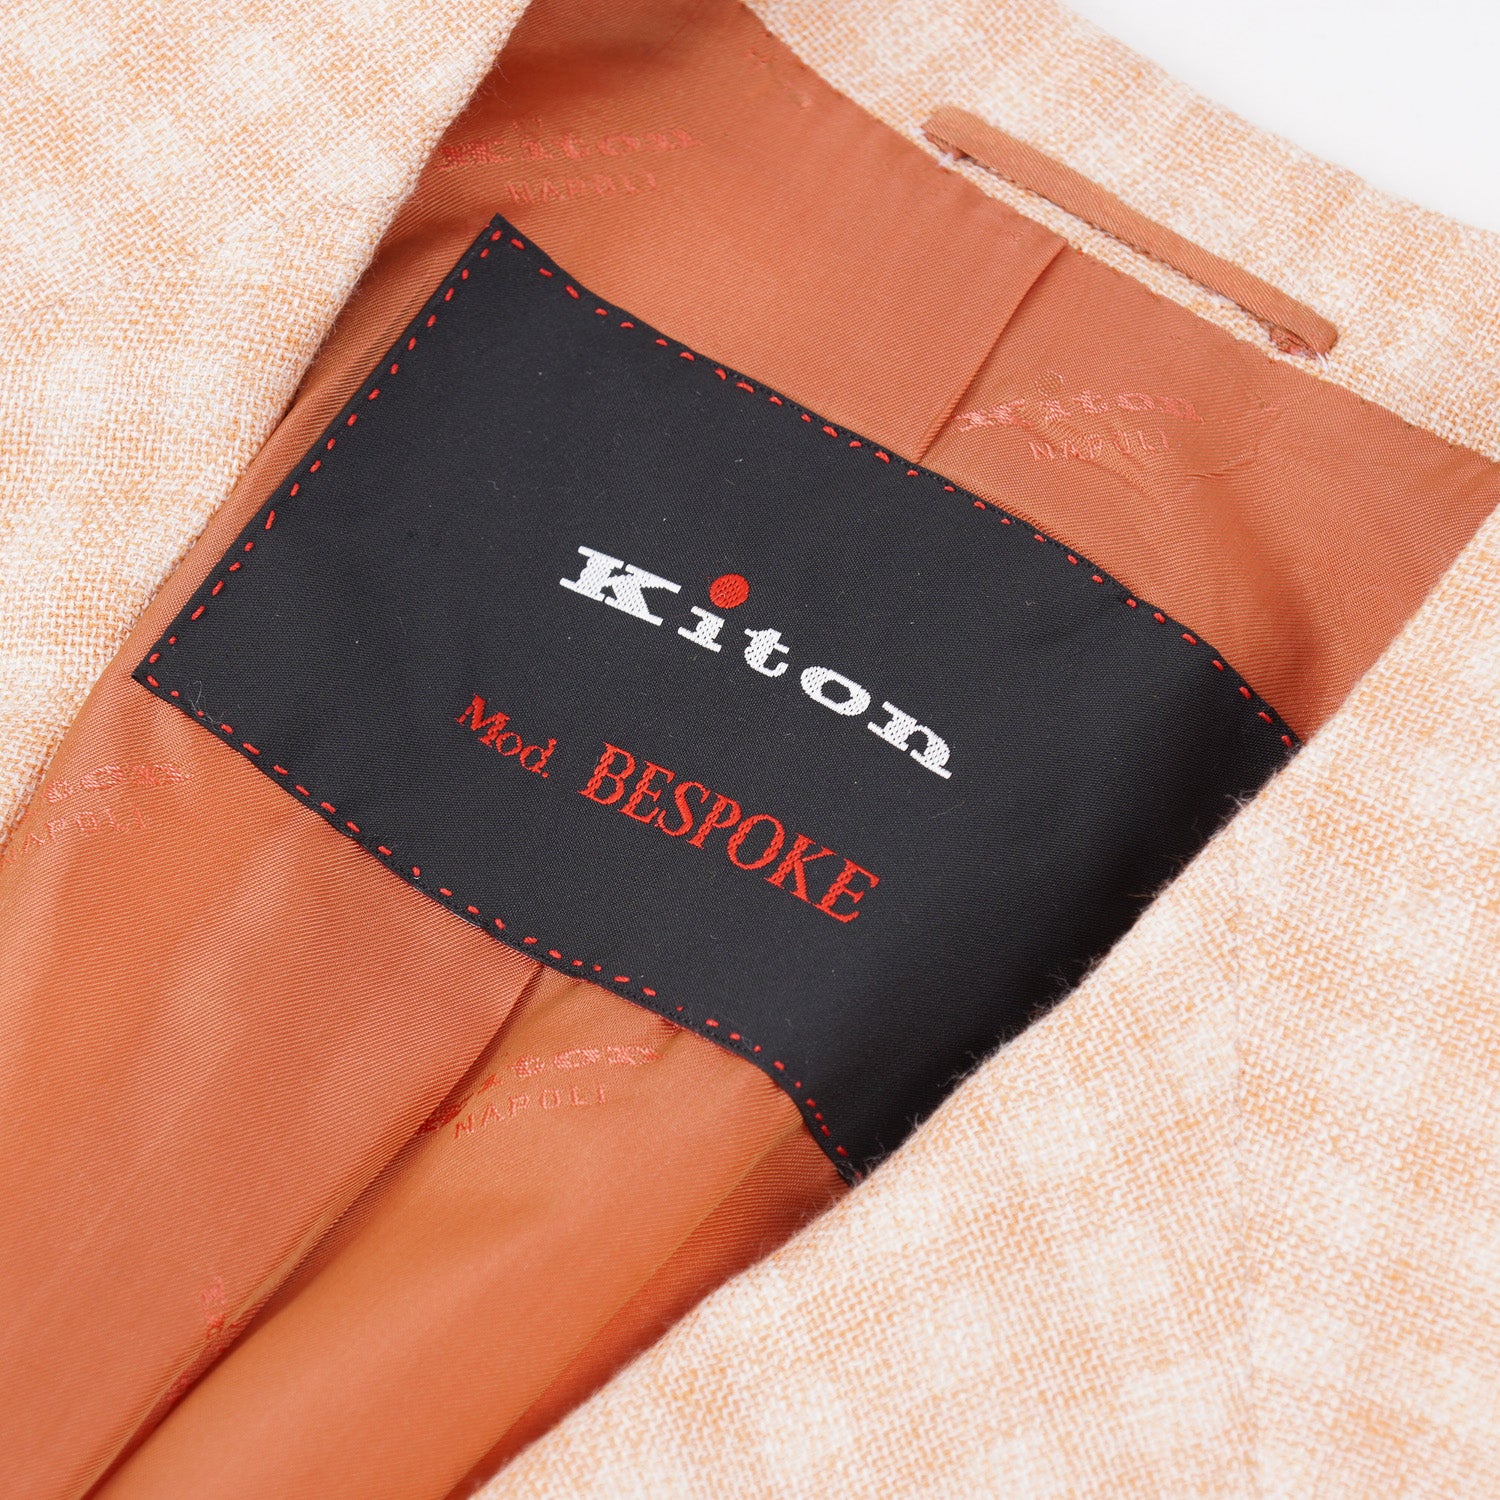 Kiton Cashmere-Silk-Linen Sport Coat - Top Shelf Apparel